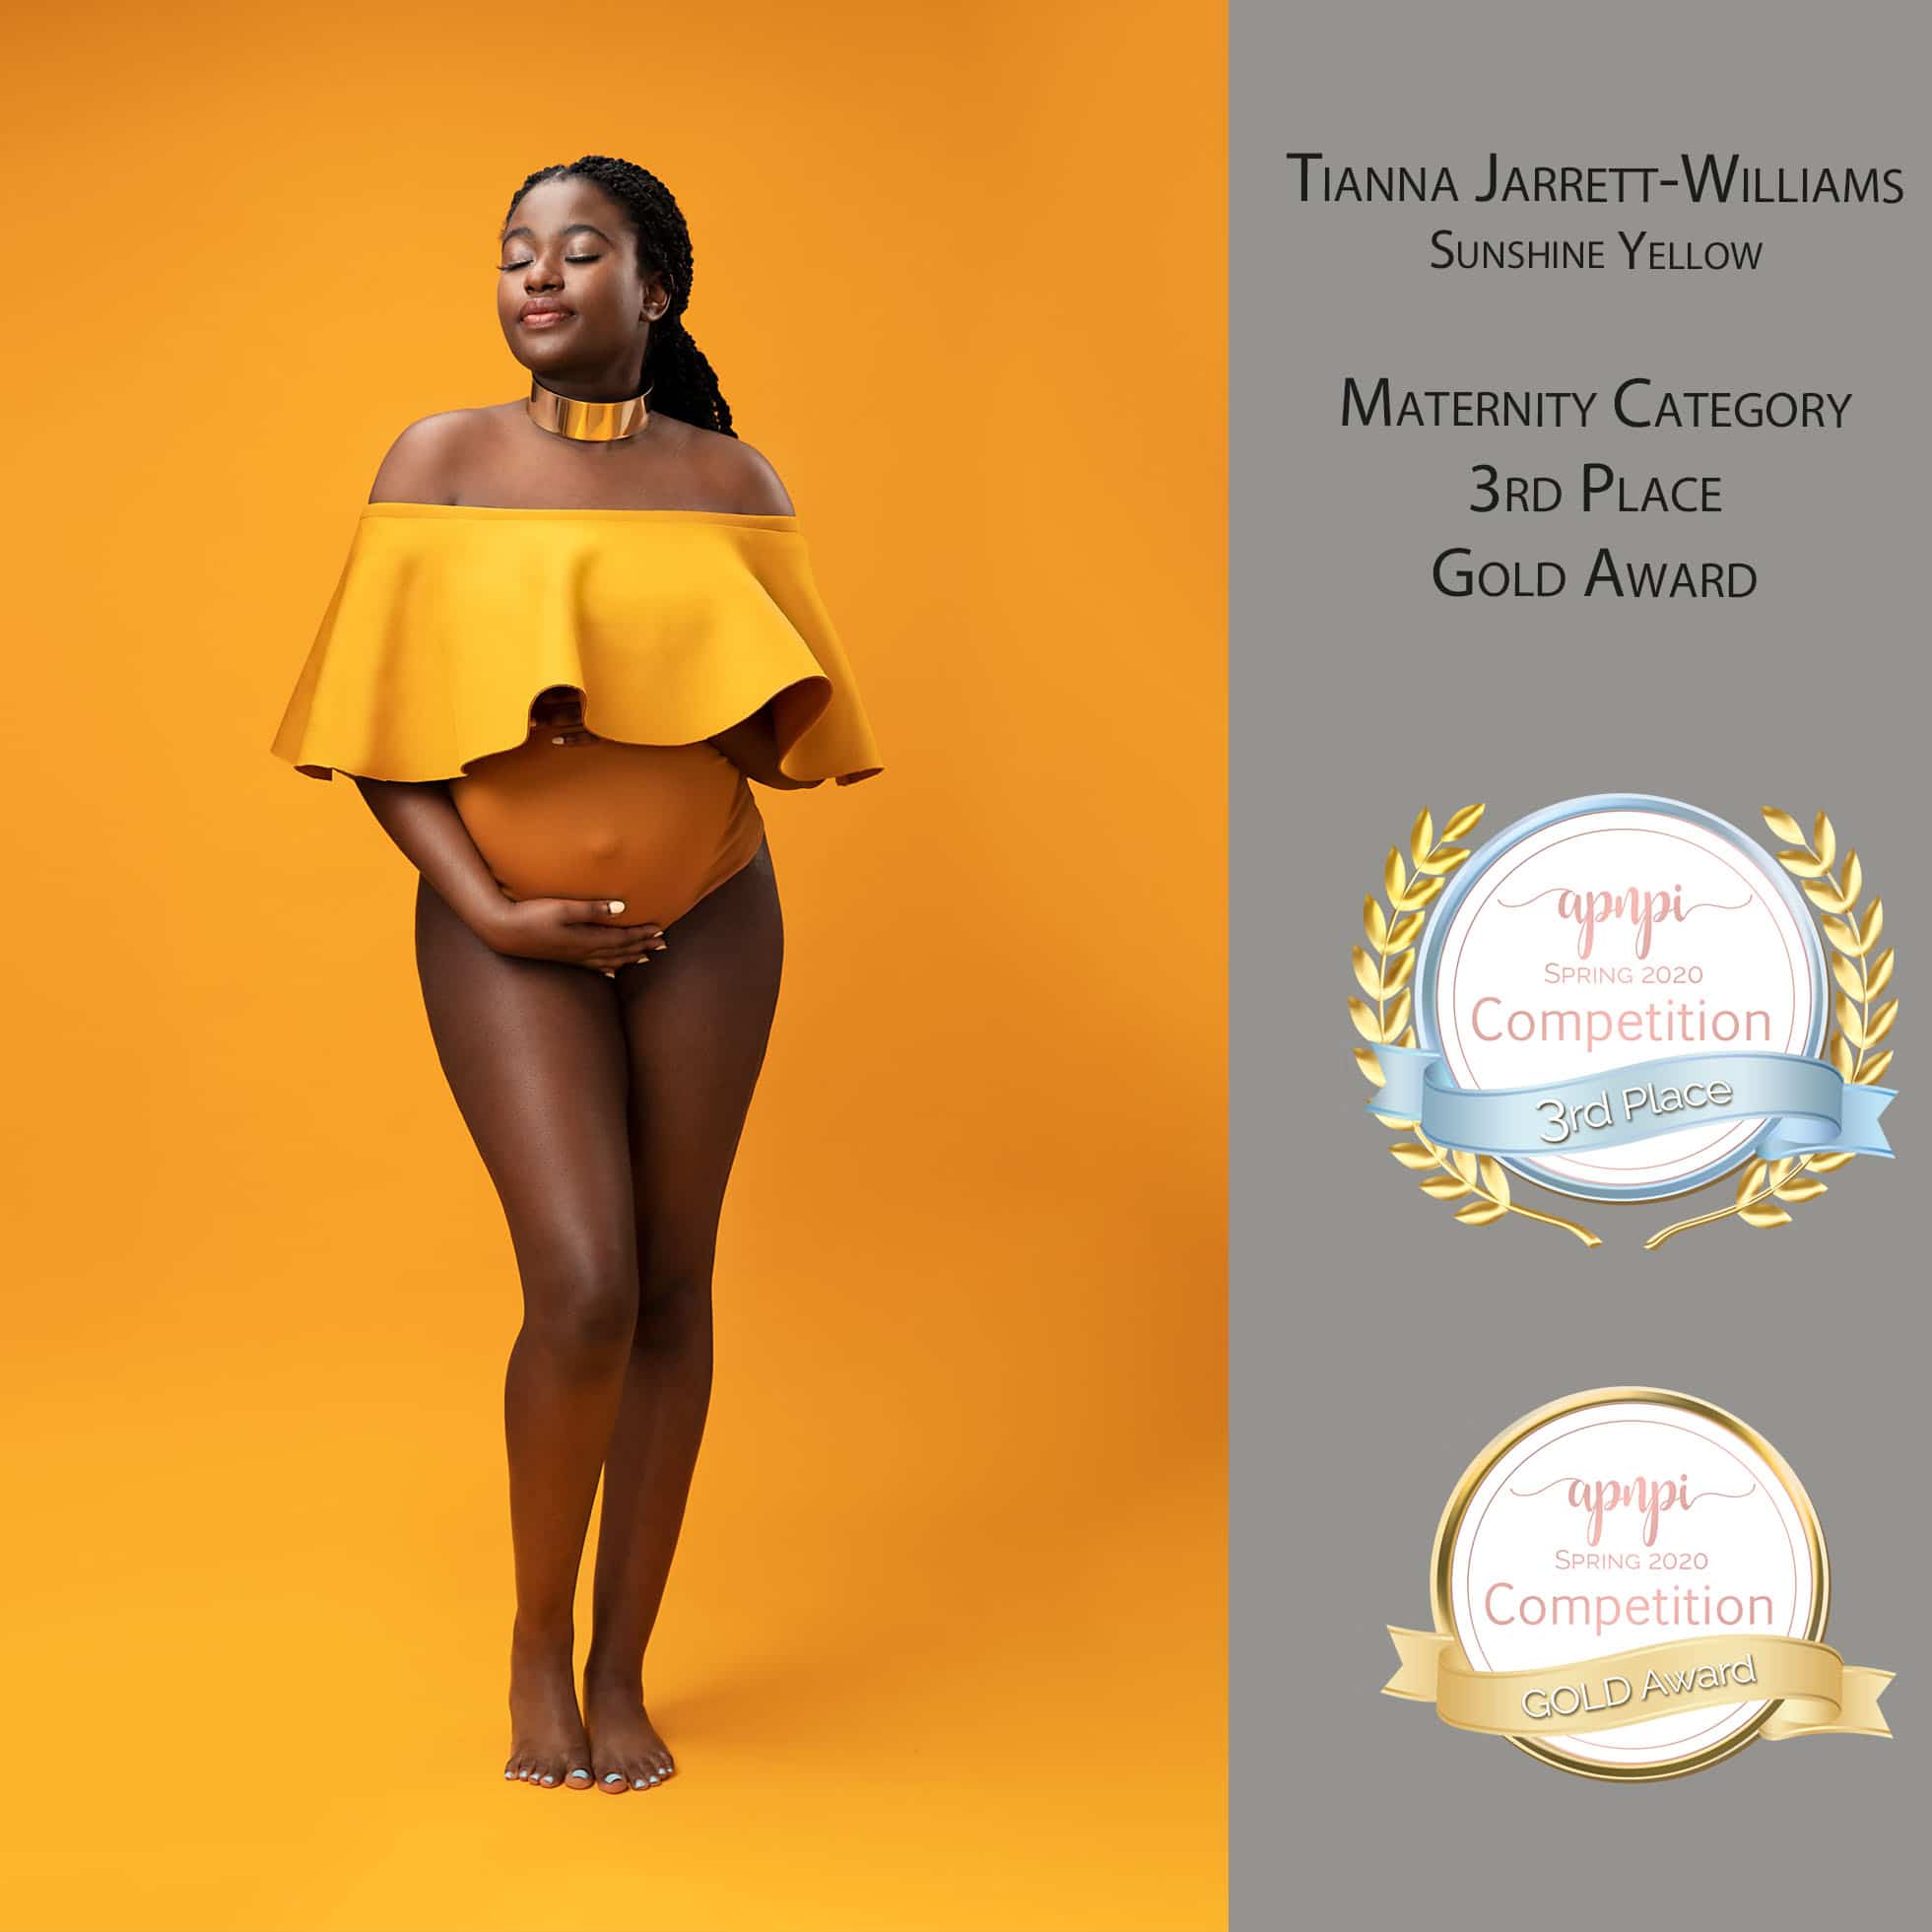 APNPI Competition 3rd Place Winner – Maternity. “Sunshine Yellow” by Tianna Jarrett-Williams